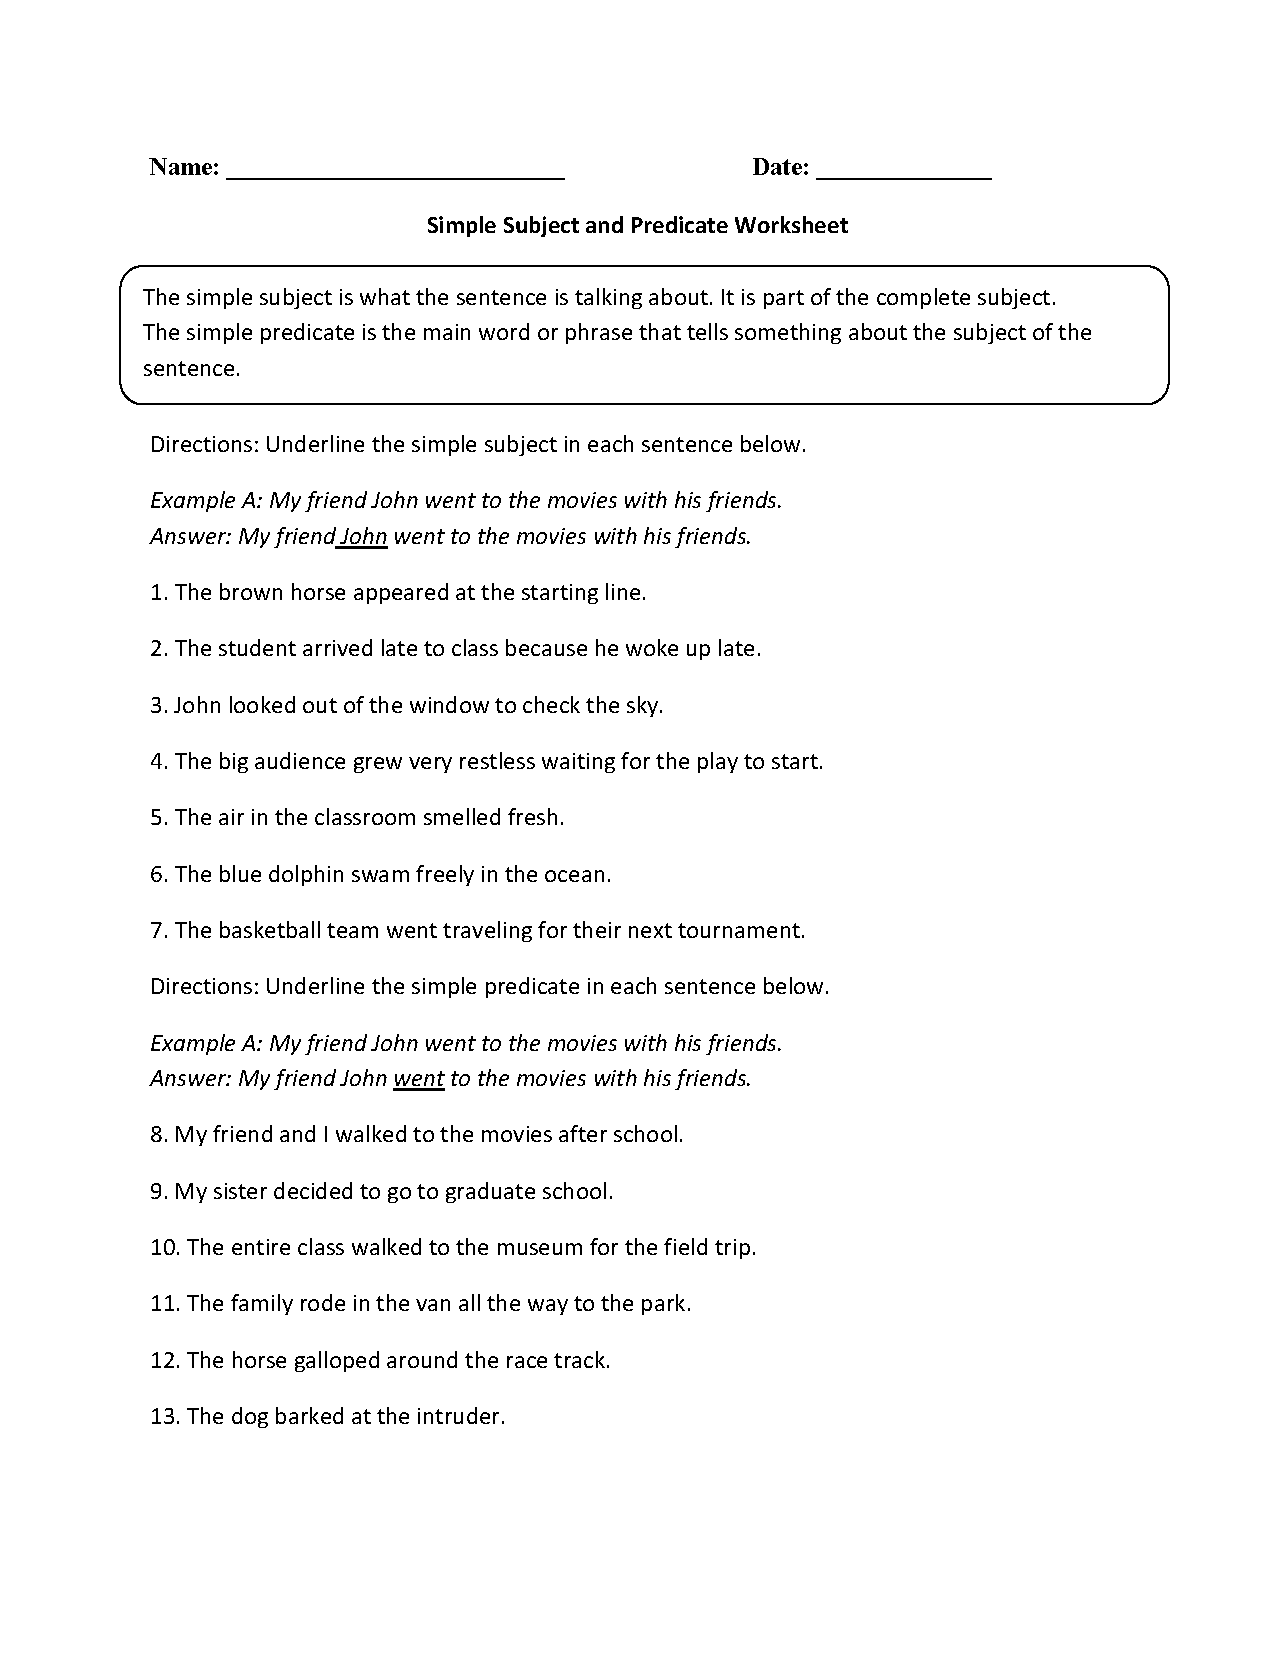 Simple Subject and Predicate Worksheet 6th Grade Image